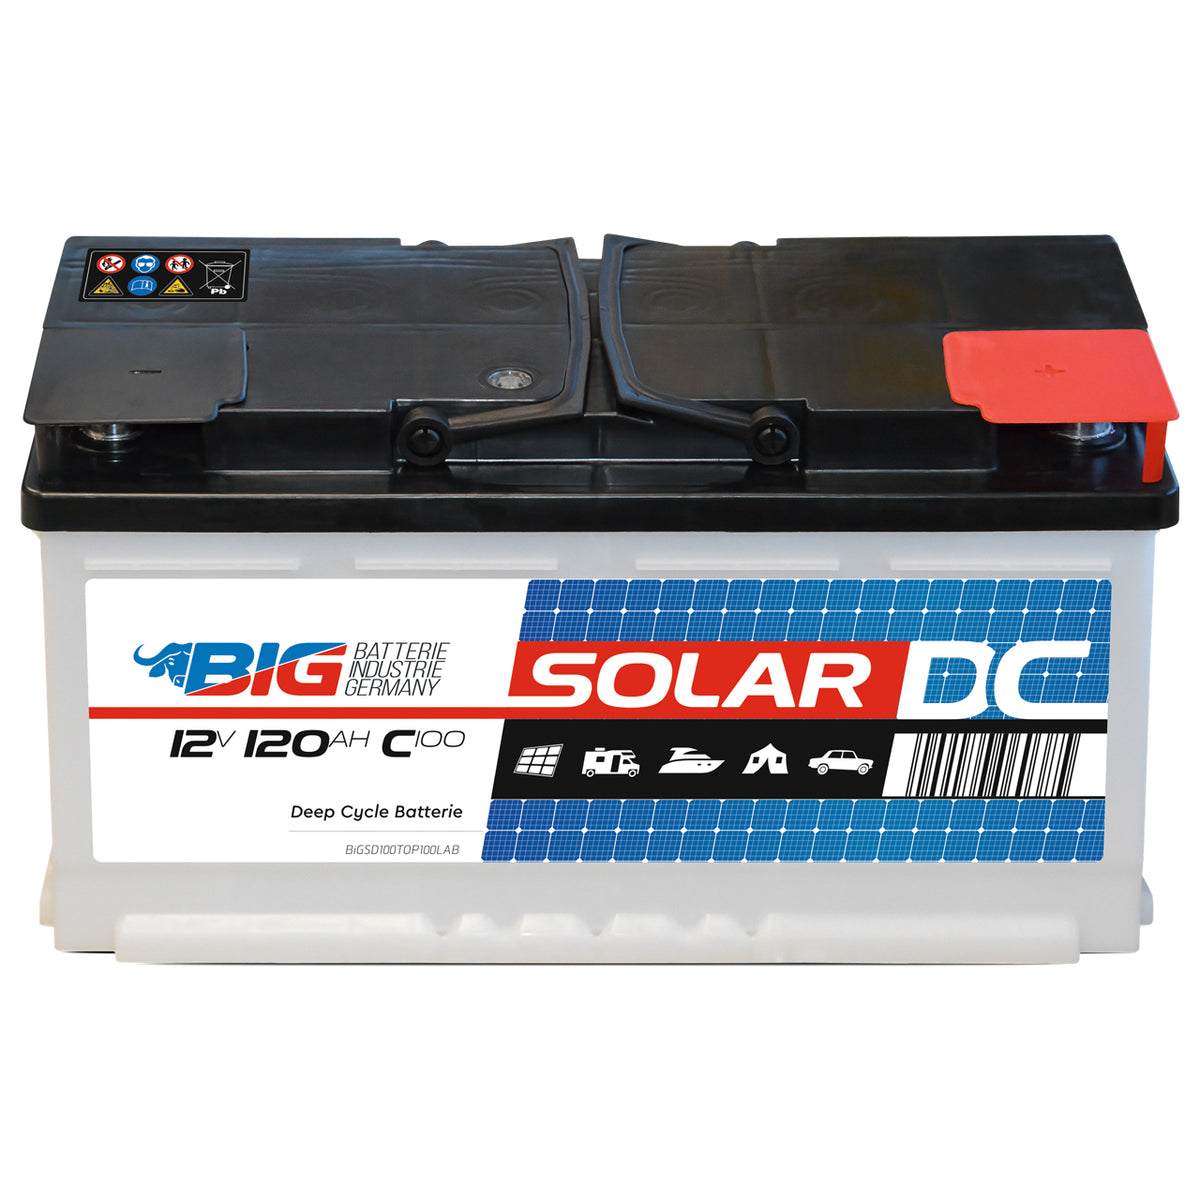 Langzeit Solarbatterie 170Ah 12V, 199,92 €